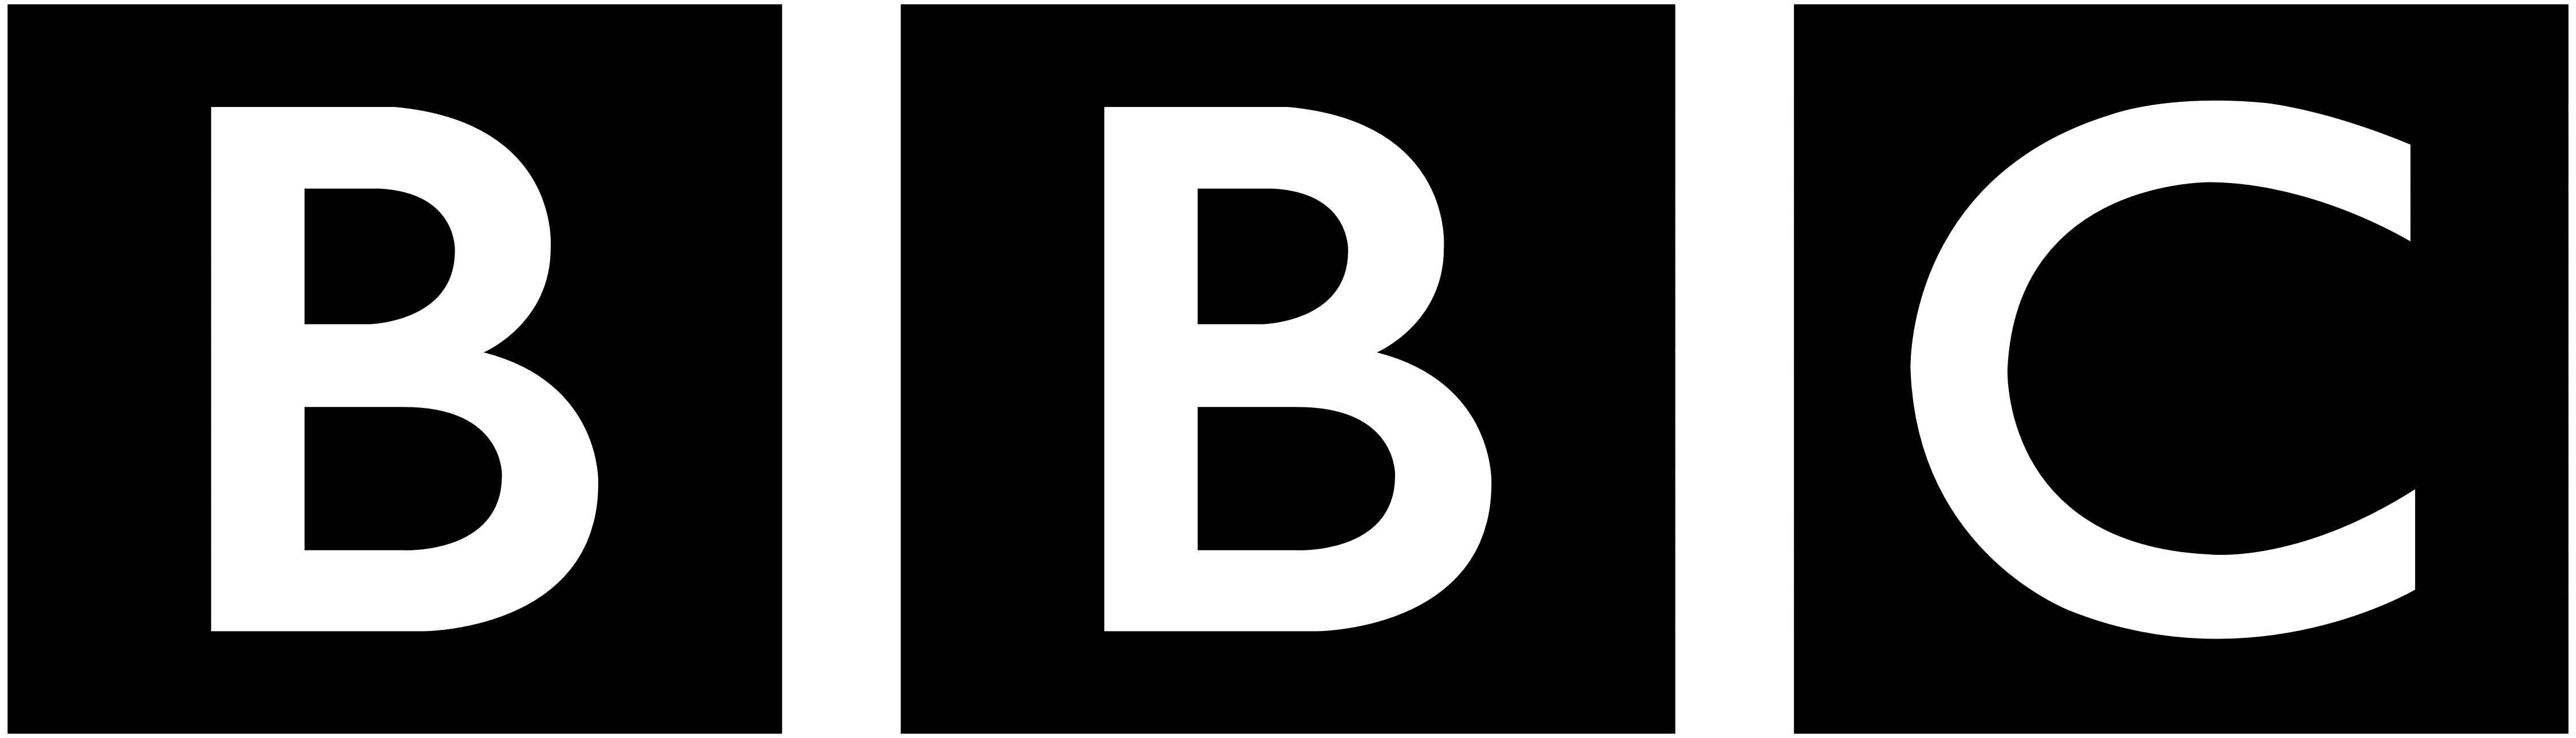 Bbc – Logos Download - Bbc, Transparent background PNG HD thumbnail